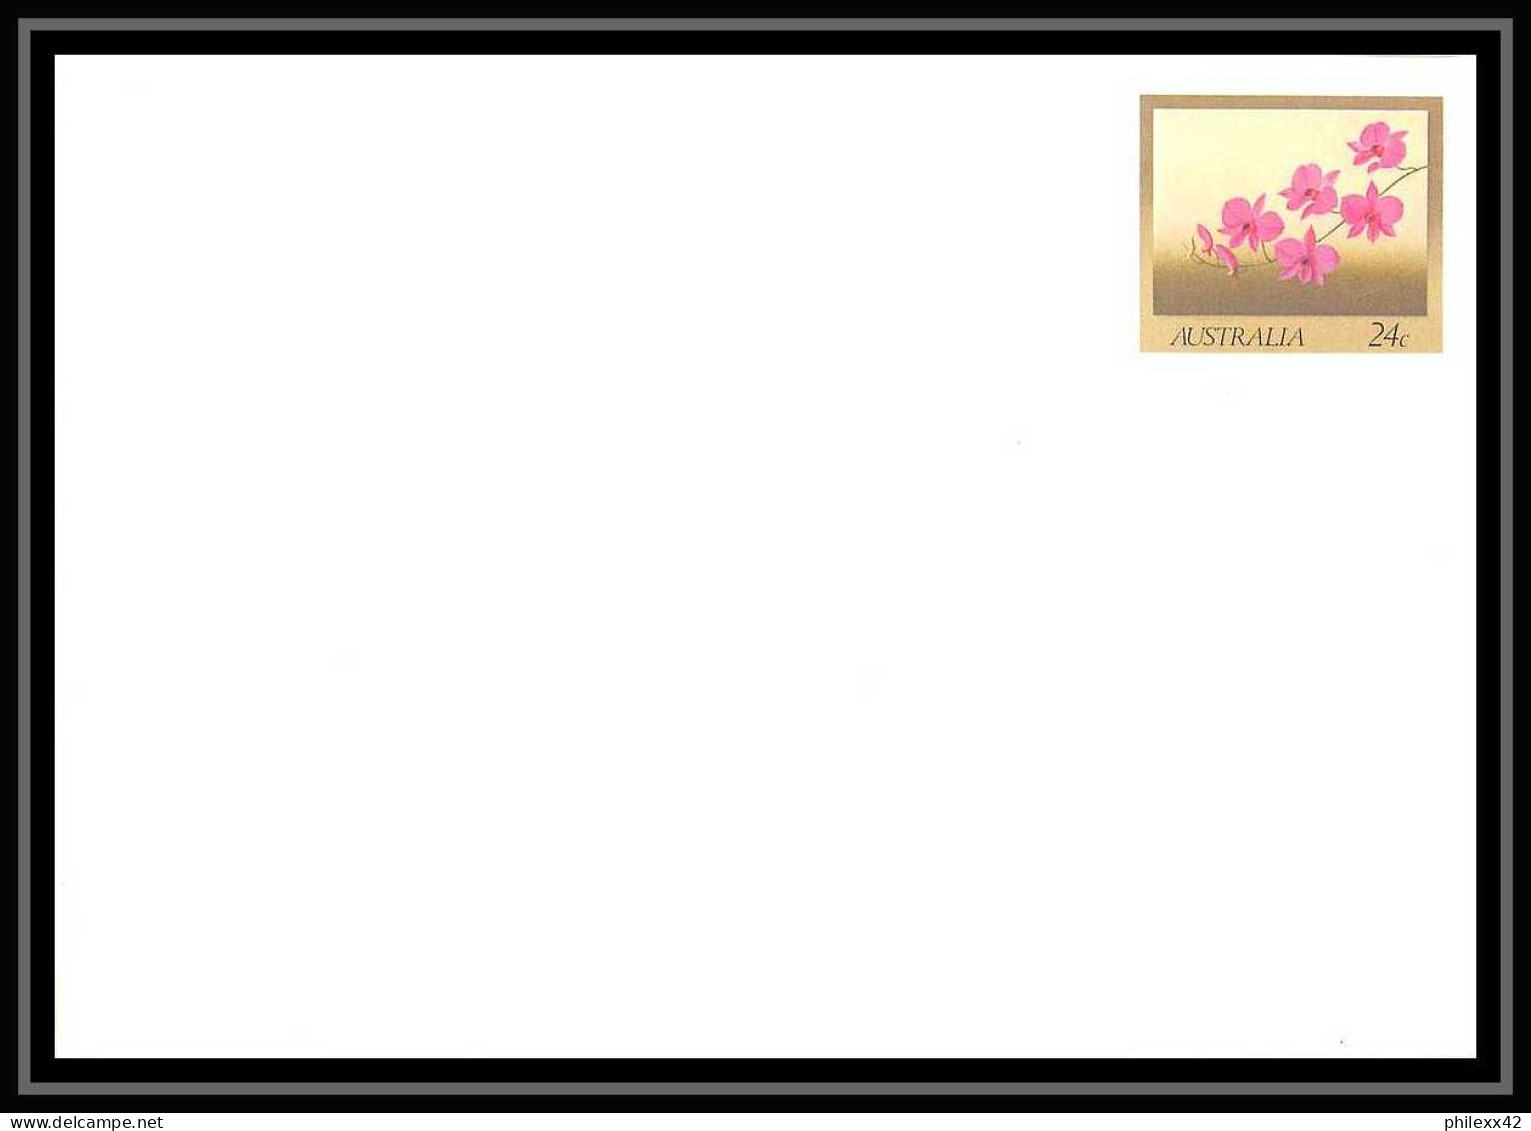 4496 24c Enveloppe Australie (australia) Neuf Tb Fleurs (plants - Flowers) Entier Postal Stationery - Interi Postali